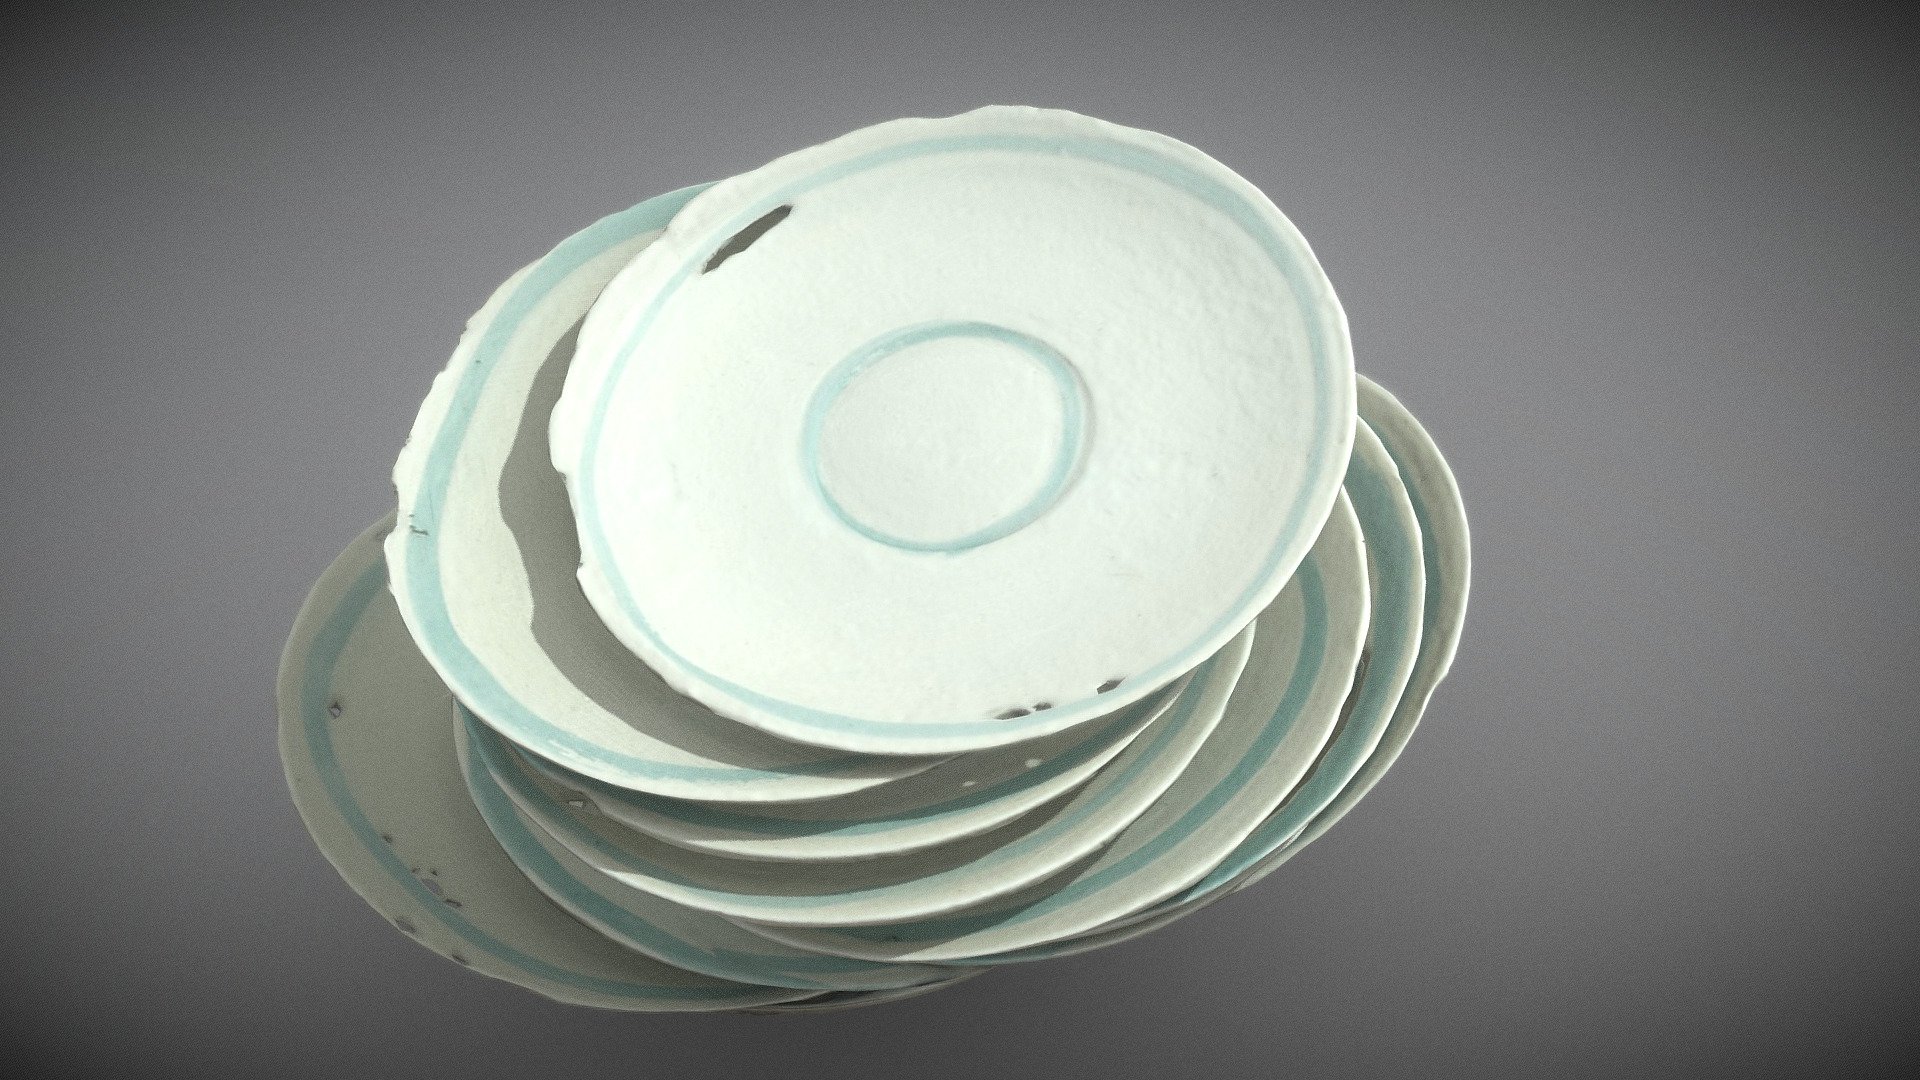 Plates Art Sculpture test scan shot with Raphael Chipault. Dslr scan.
Low Poly model 4K textures 3d model